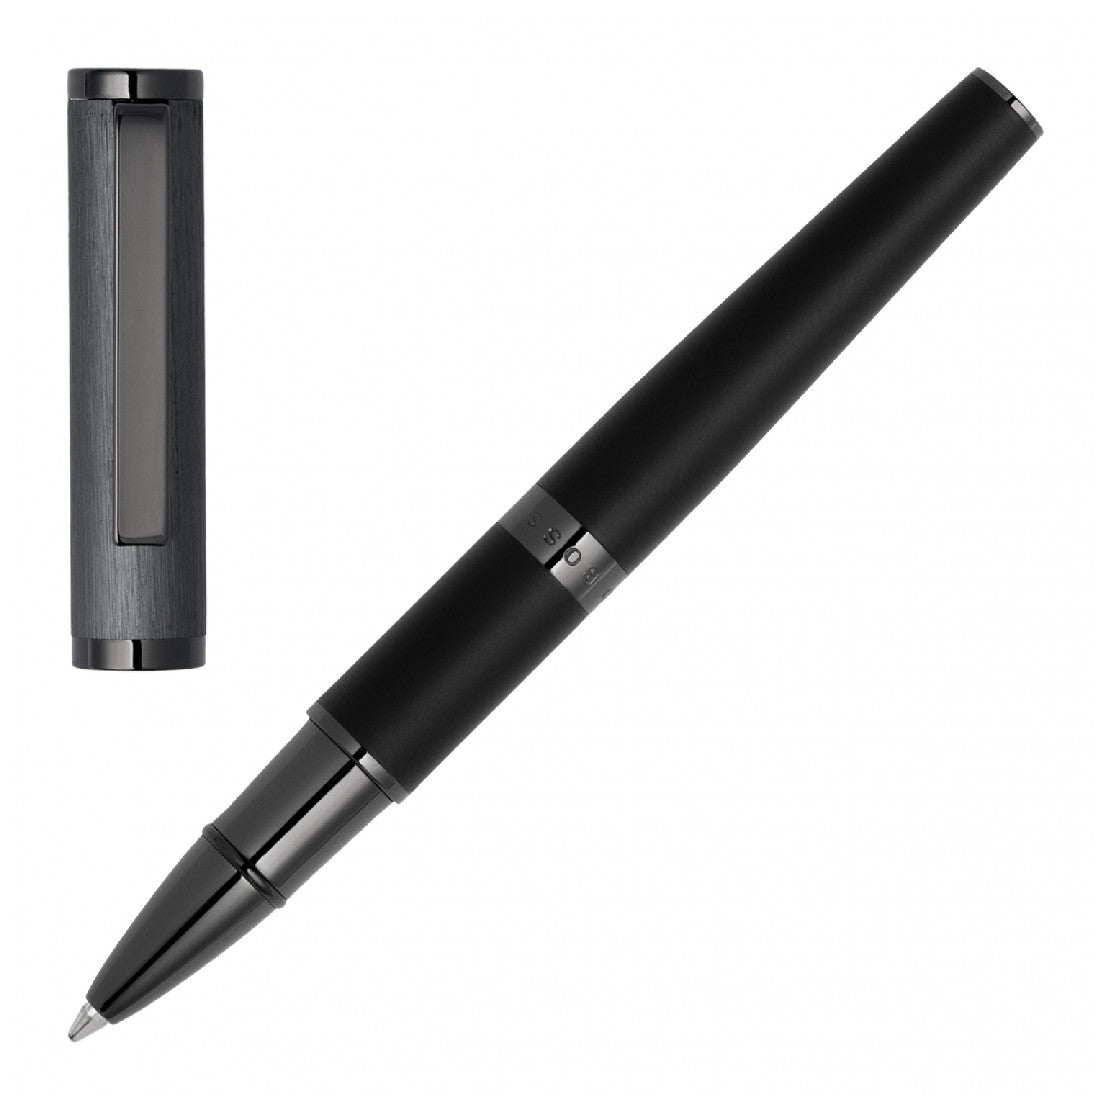 قلم باللون الرمادي داكن وأسود من هوغو بوس - HBPEN-0020